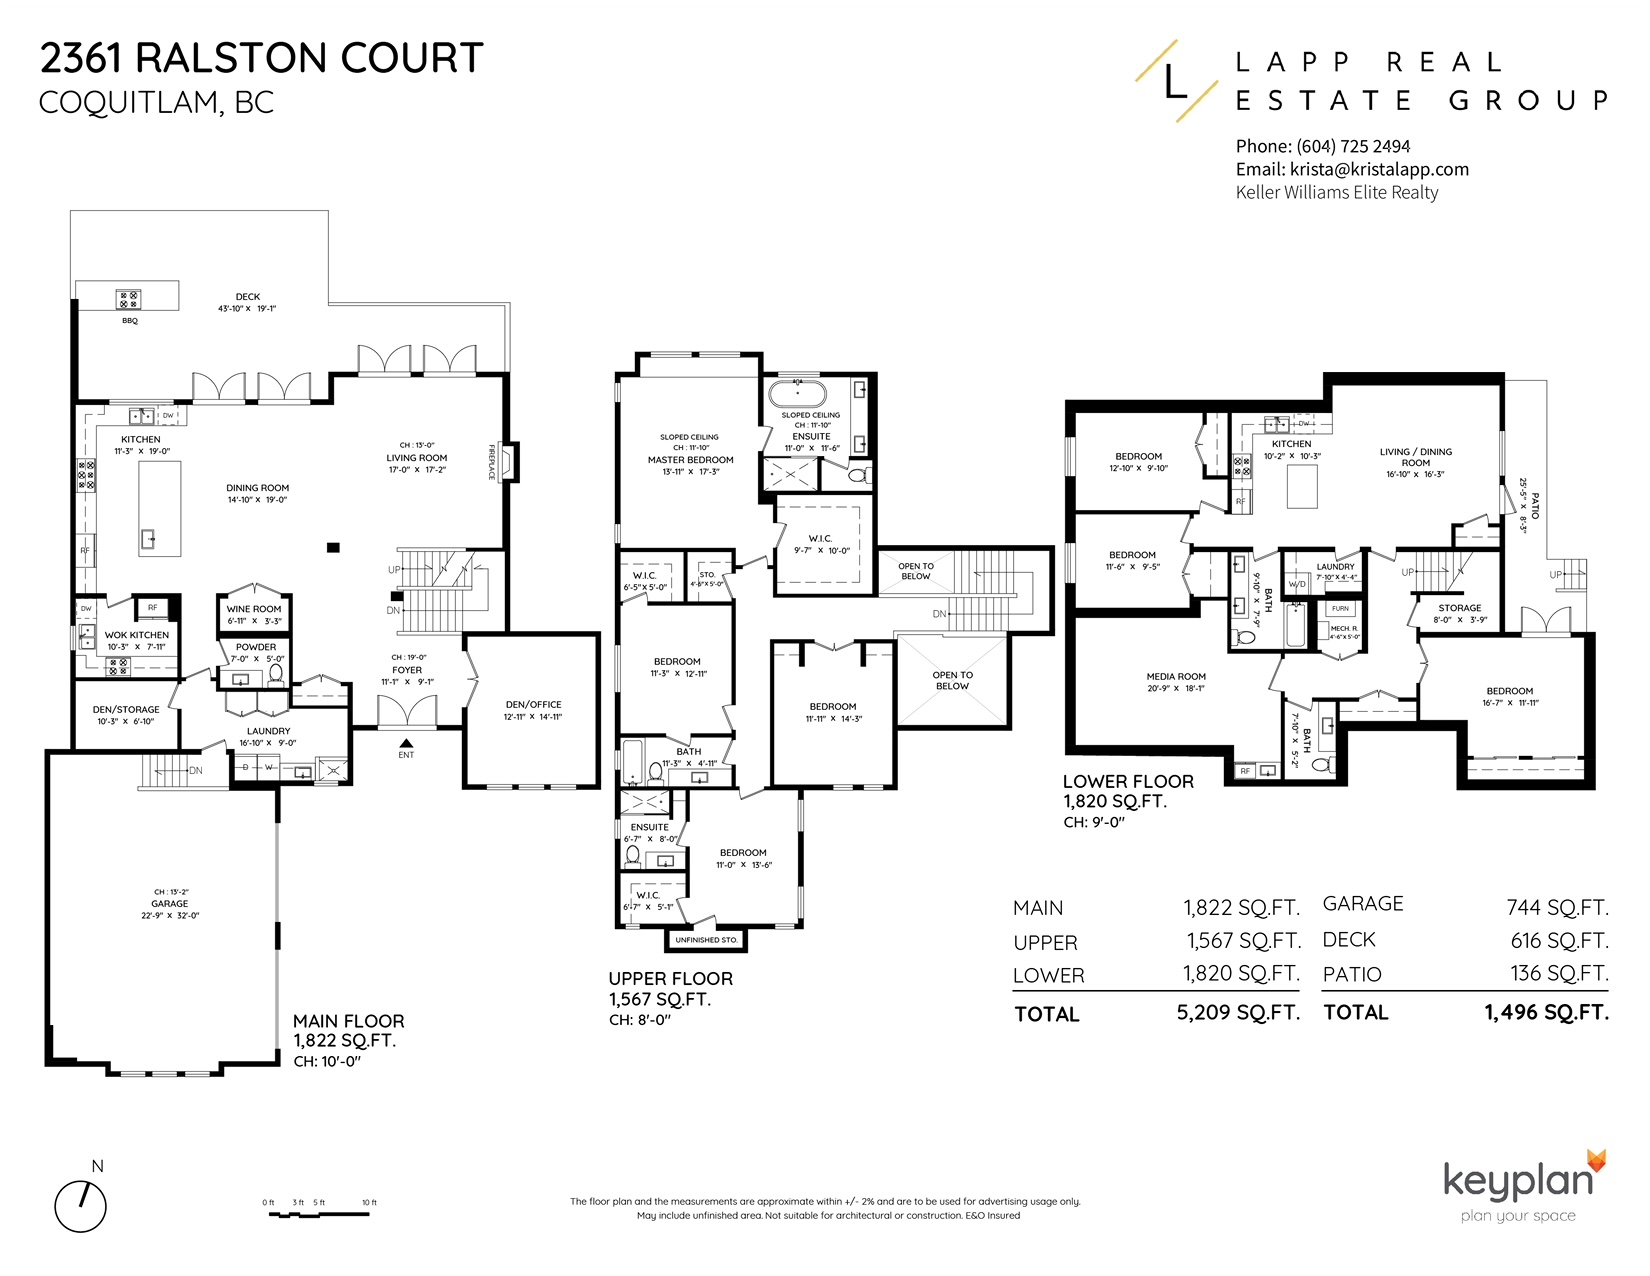 Coquitlam Luxury Realtor Krista Lapp 2361 Ralston Court Coquitlam Layout Floor plan